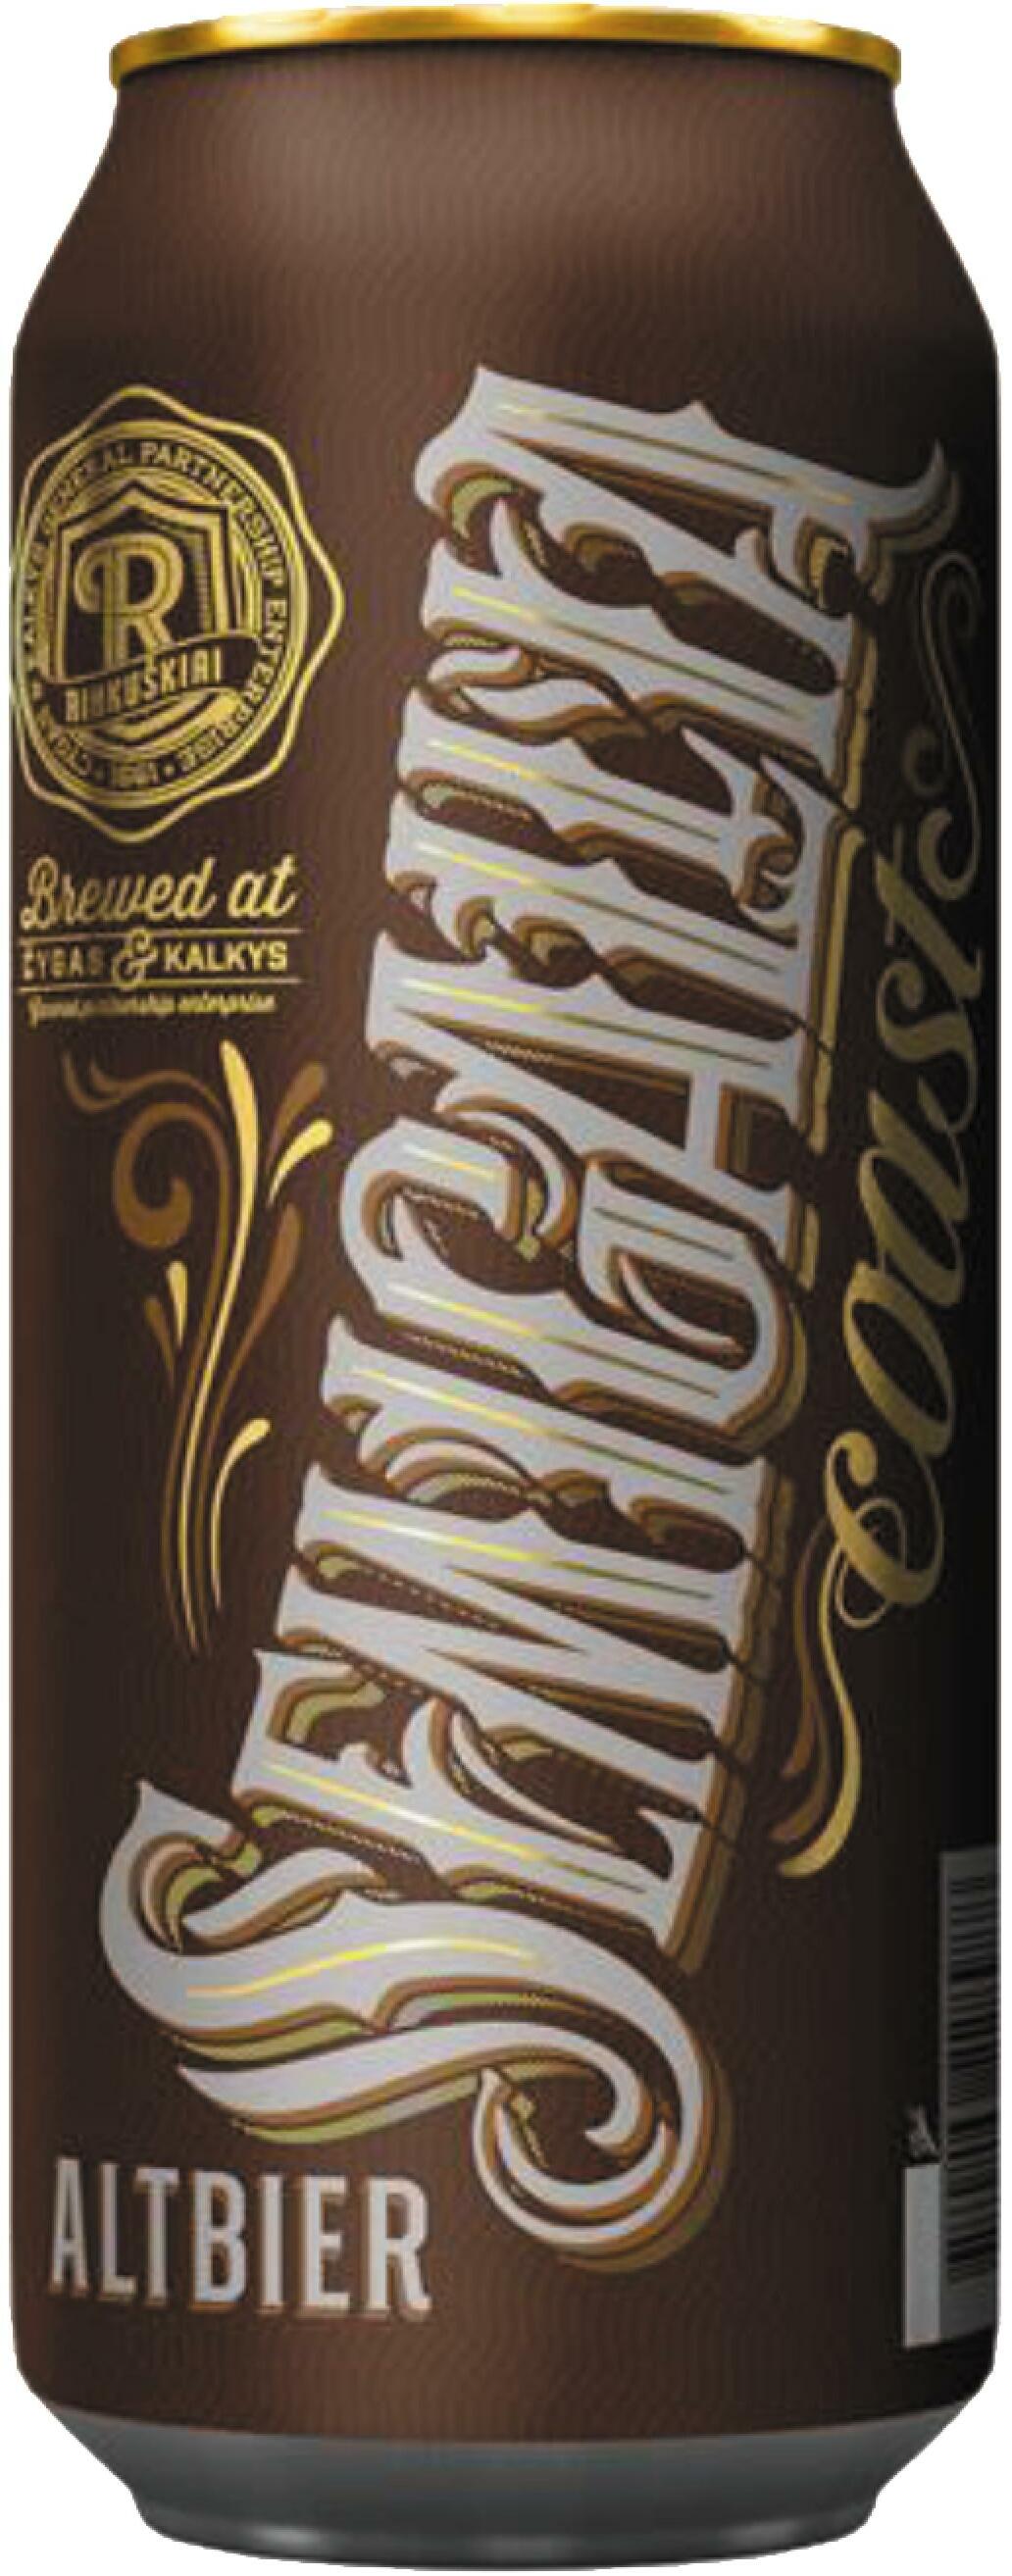 картинка Пиво Семигаллиа коаст Алтбиер от магазина Юта